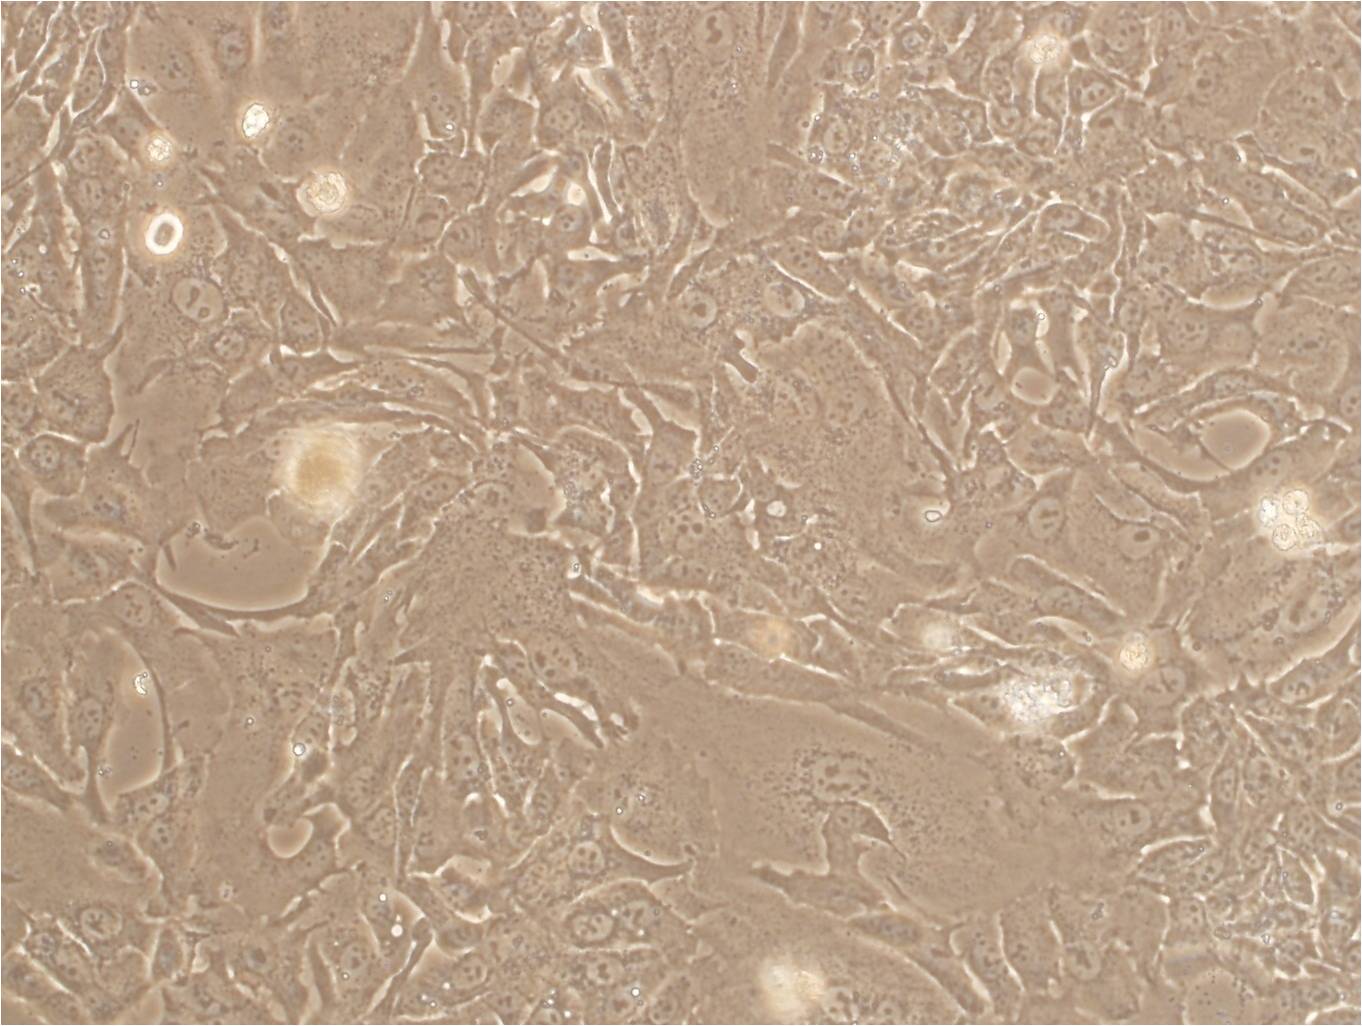 THLE-2 cell line人肝永生化细胞系